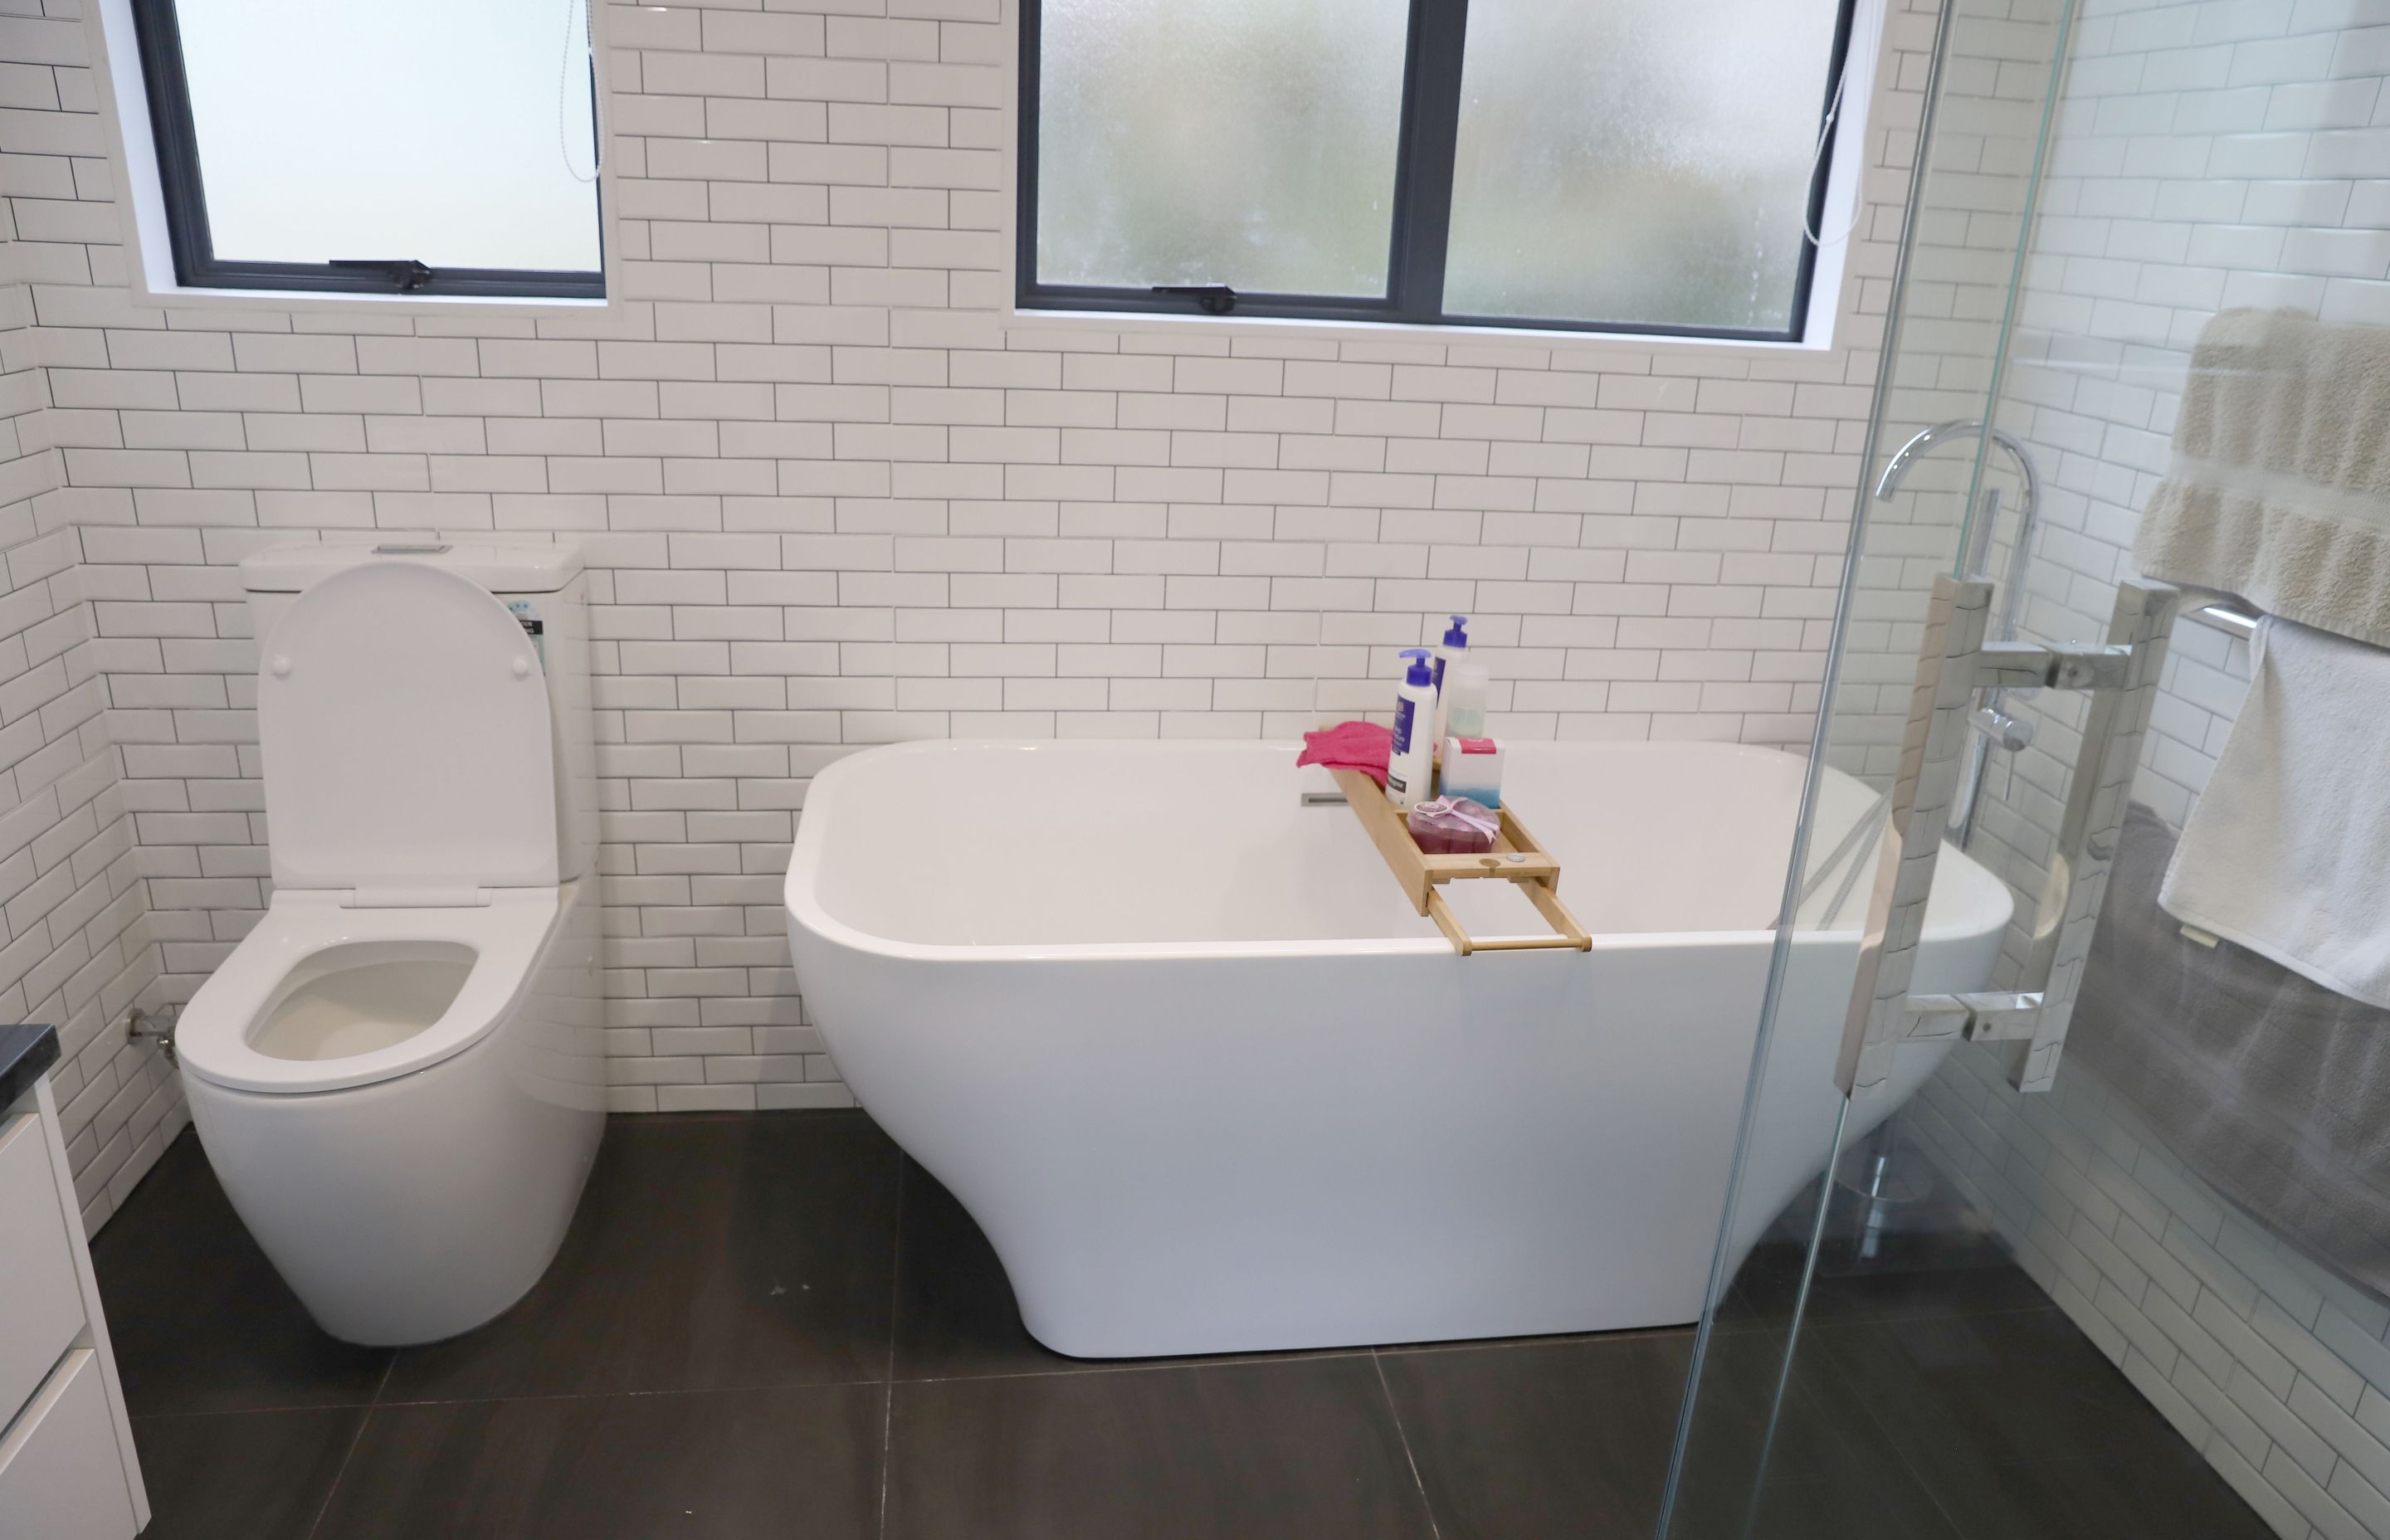 A smaller freestanding bathtub installed in this Ellerslie bathroom renovation